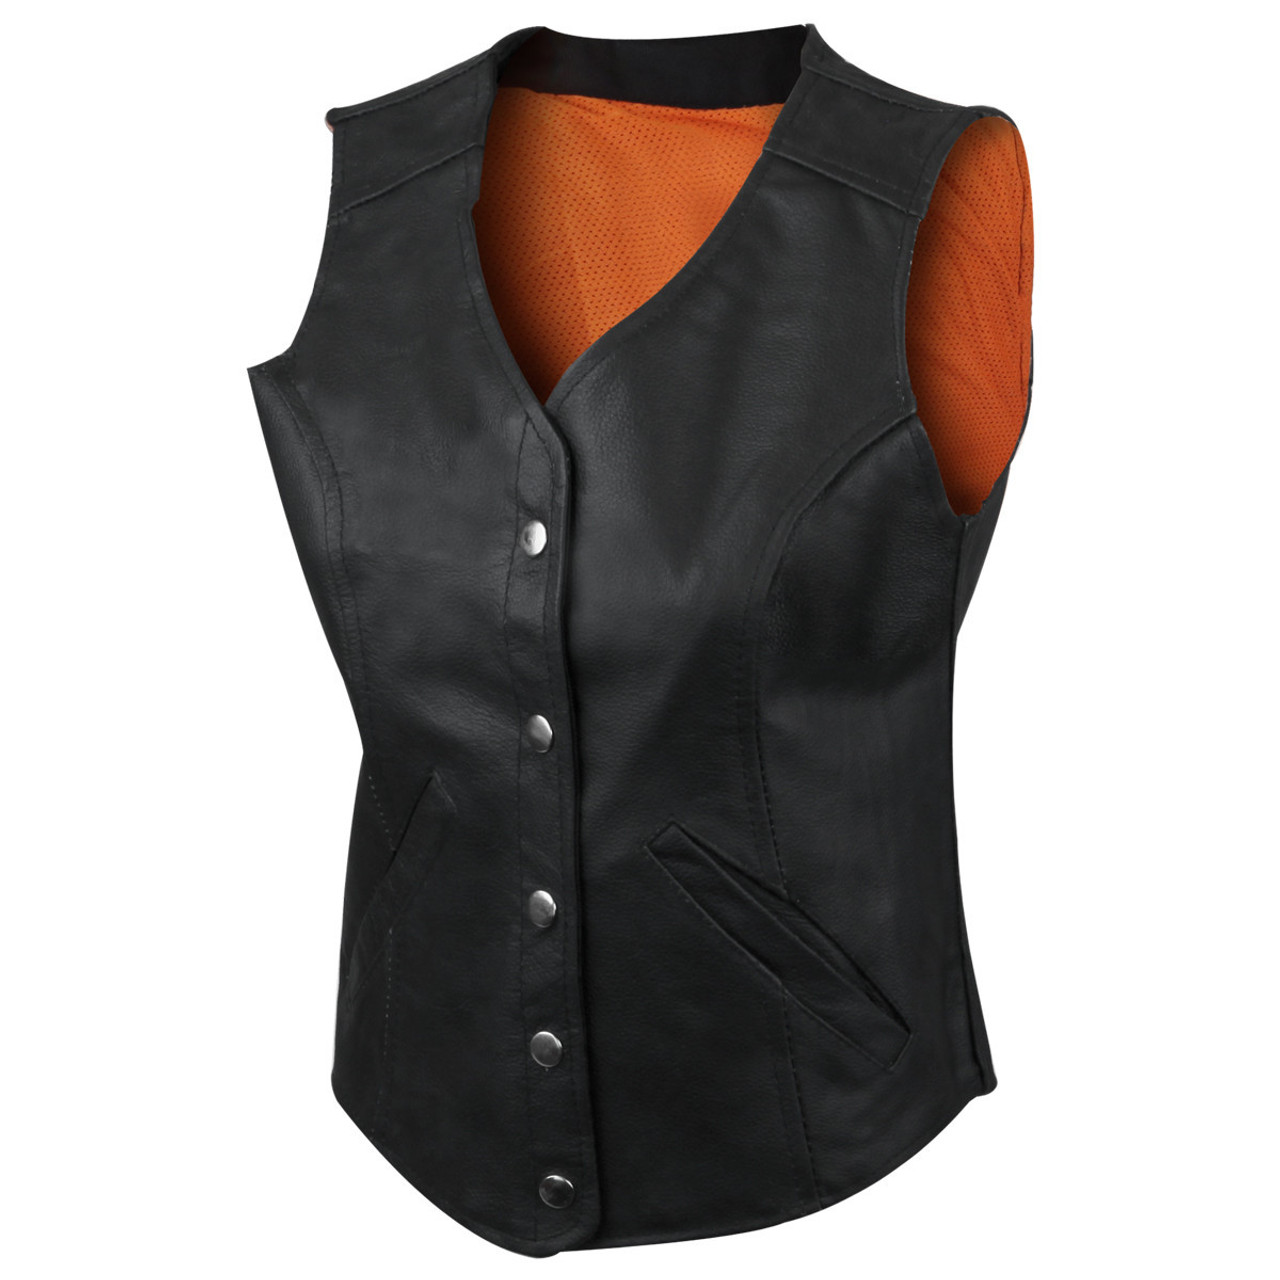 Jafrum Women's Five Snap Leather Vest with Gun Pocket